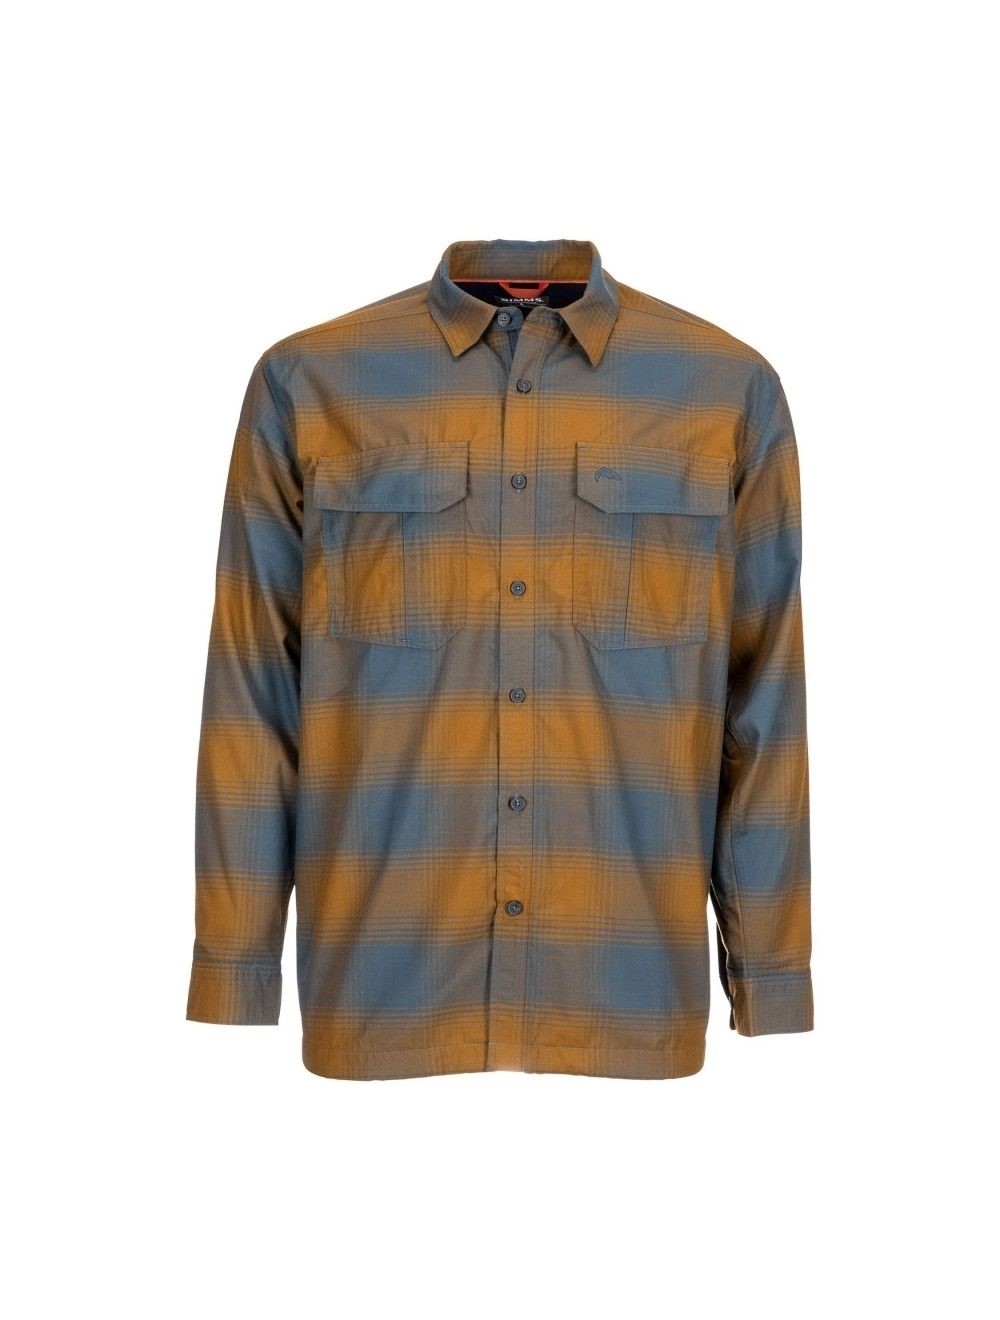 Simms M's Coldweather L/S Shirt - Dark Bronze Buffalo Blur Plaid - Medium